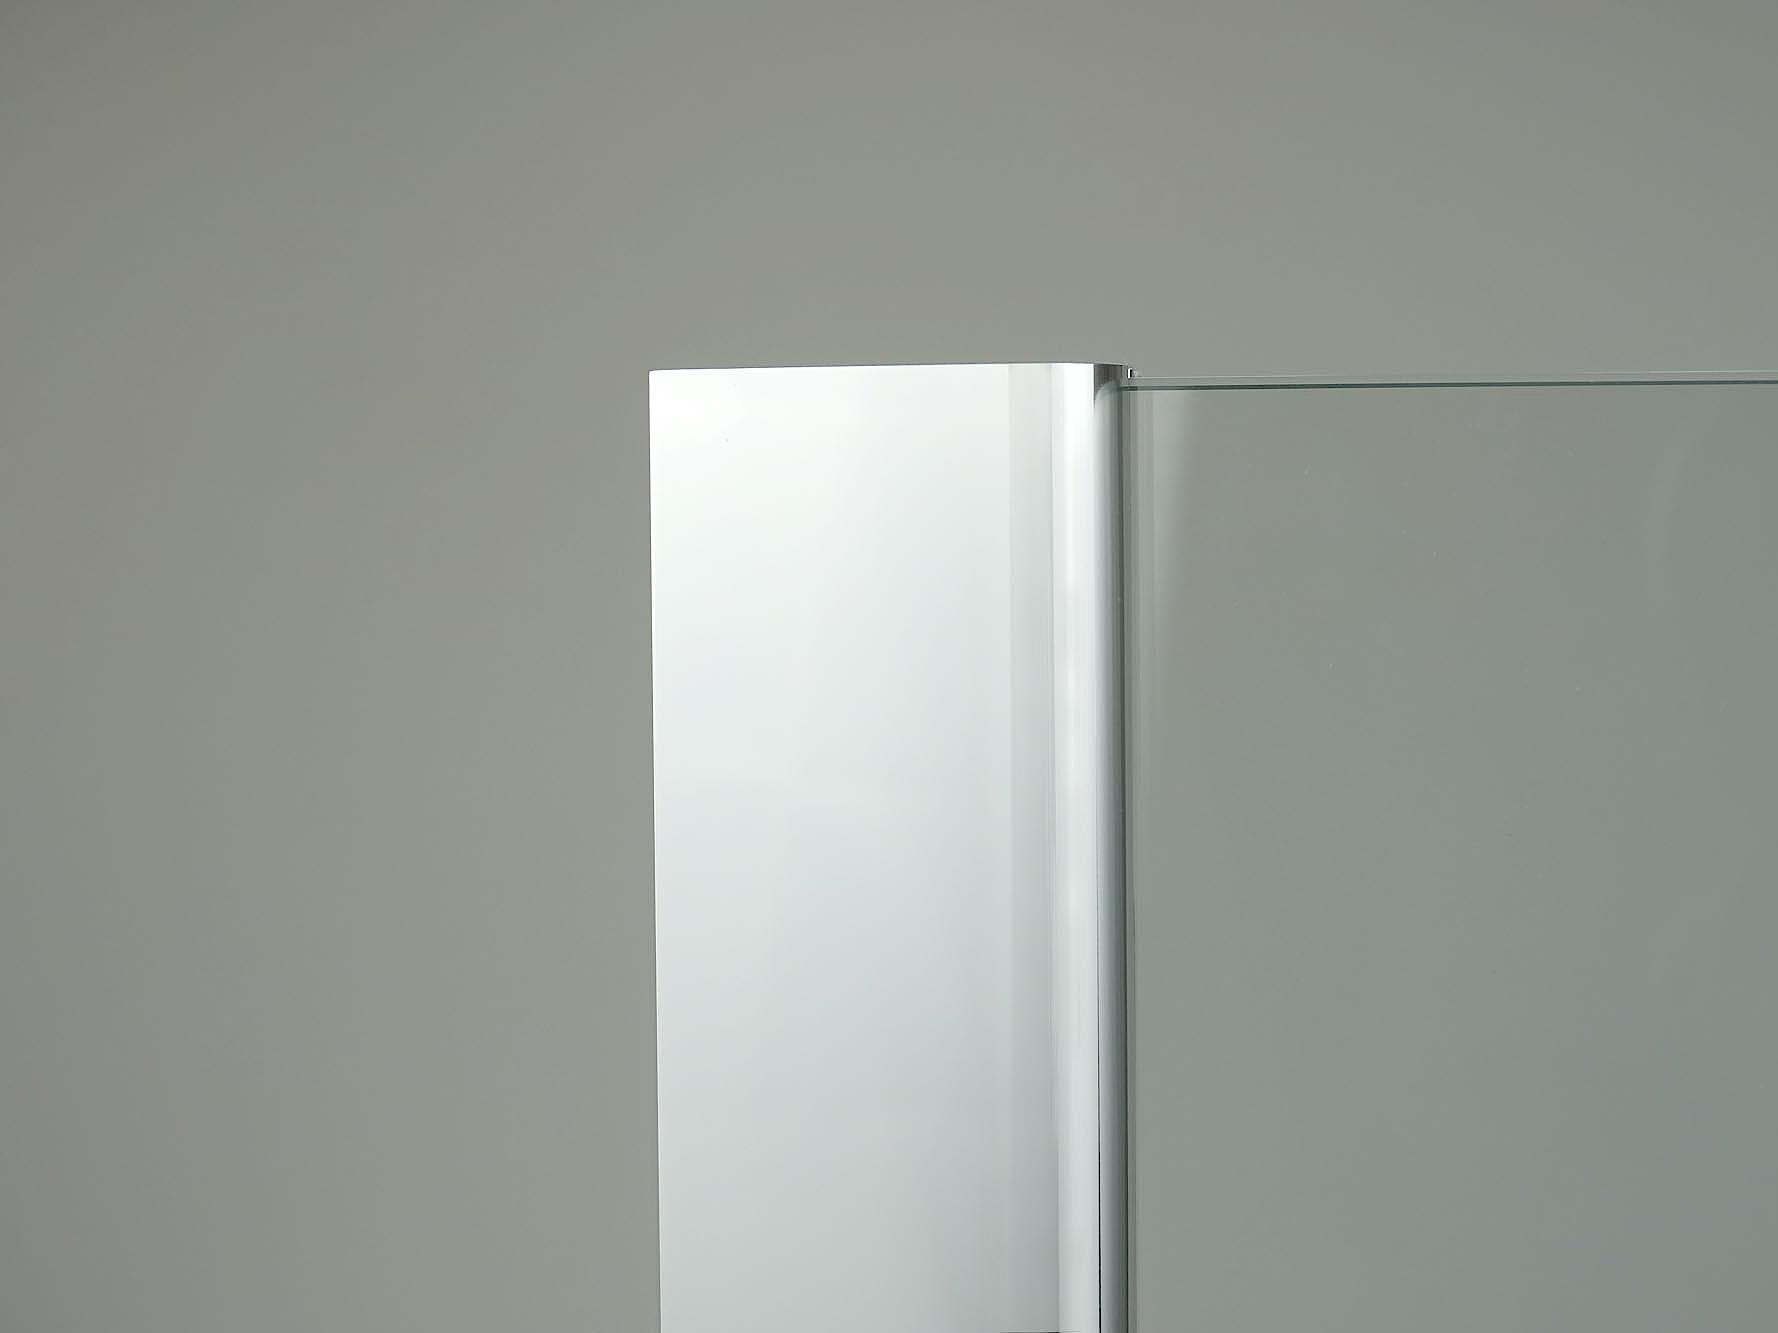 Kermi shower enclosure, wall profile surface High-Gloss Silver